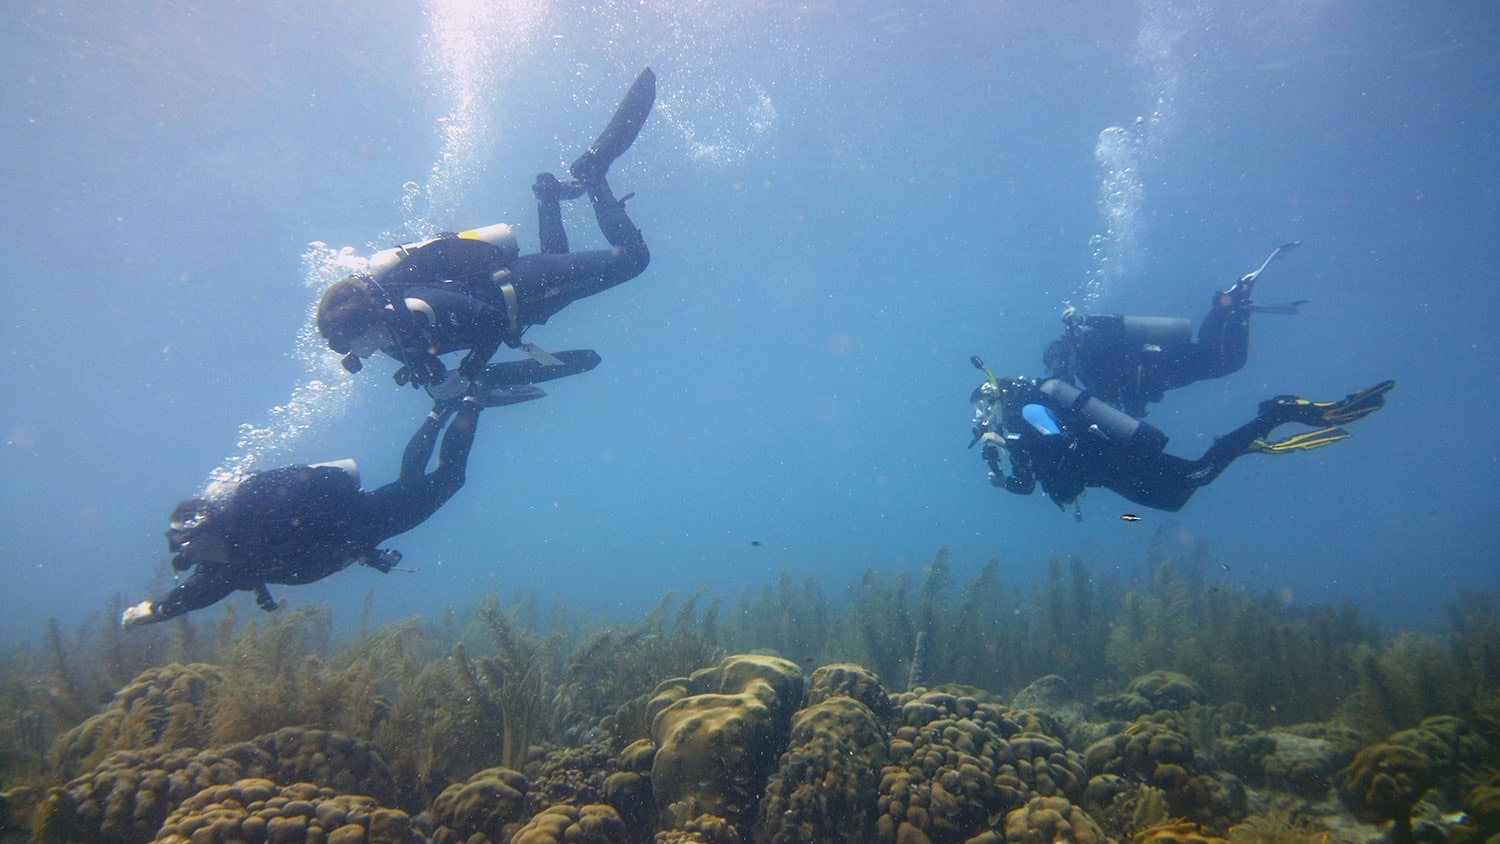 A group of divers explore the Jeff Davis Memorial dive site in Bonaire